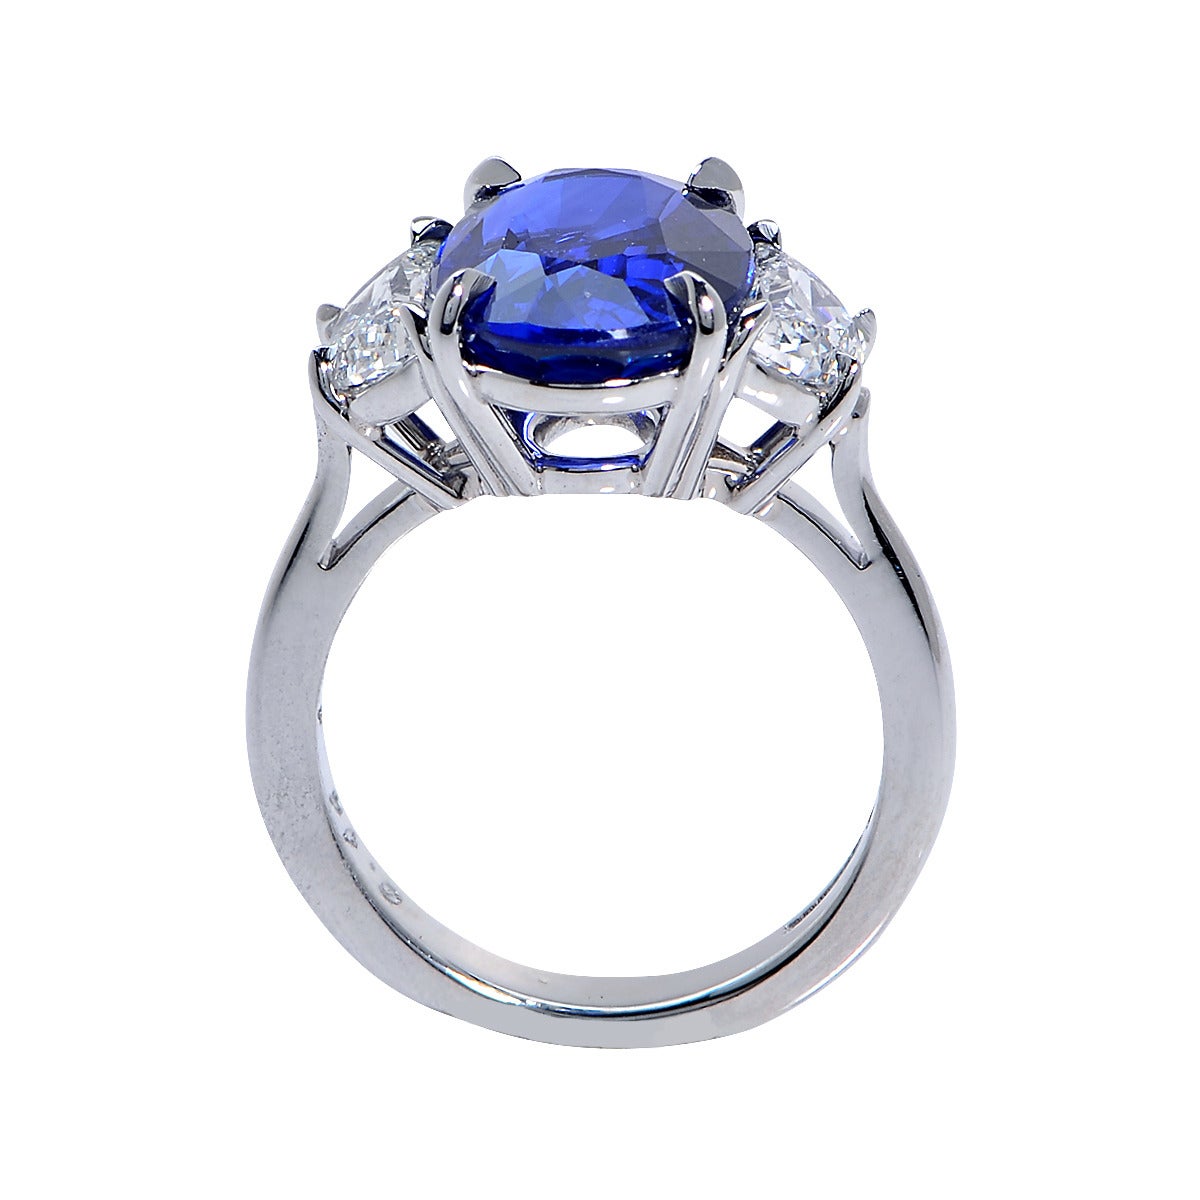 6.14 Carat Ceylon Sapphire Ring For Sale at 1stdibs